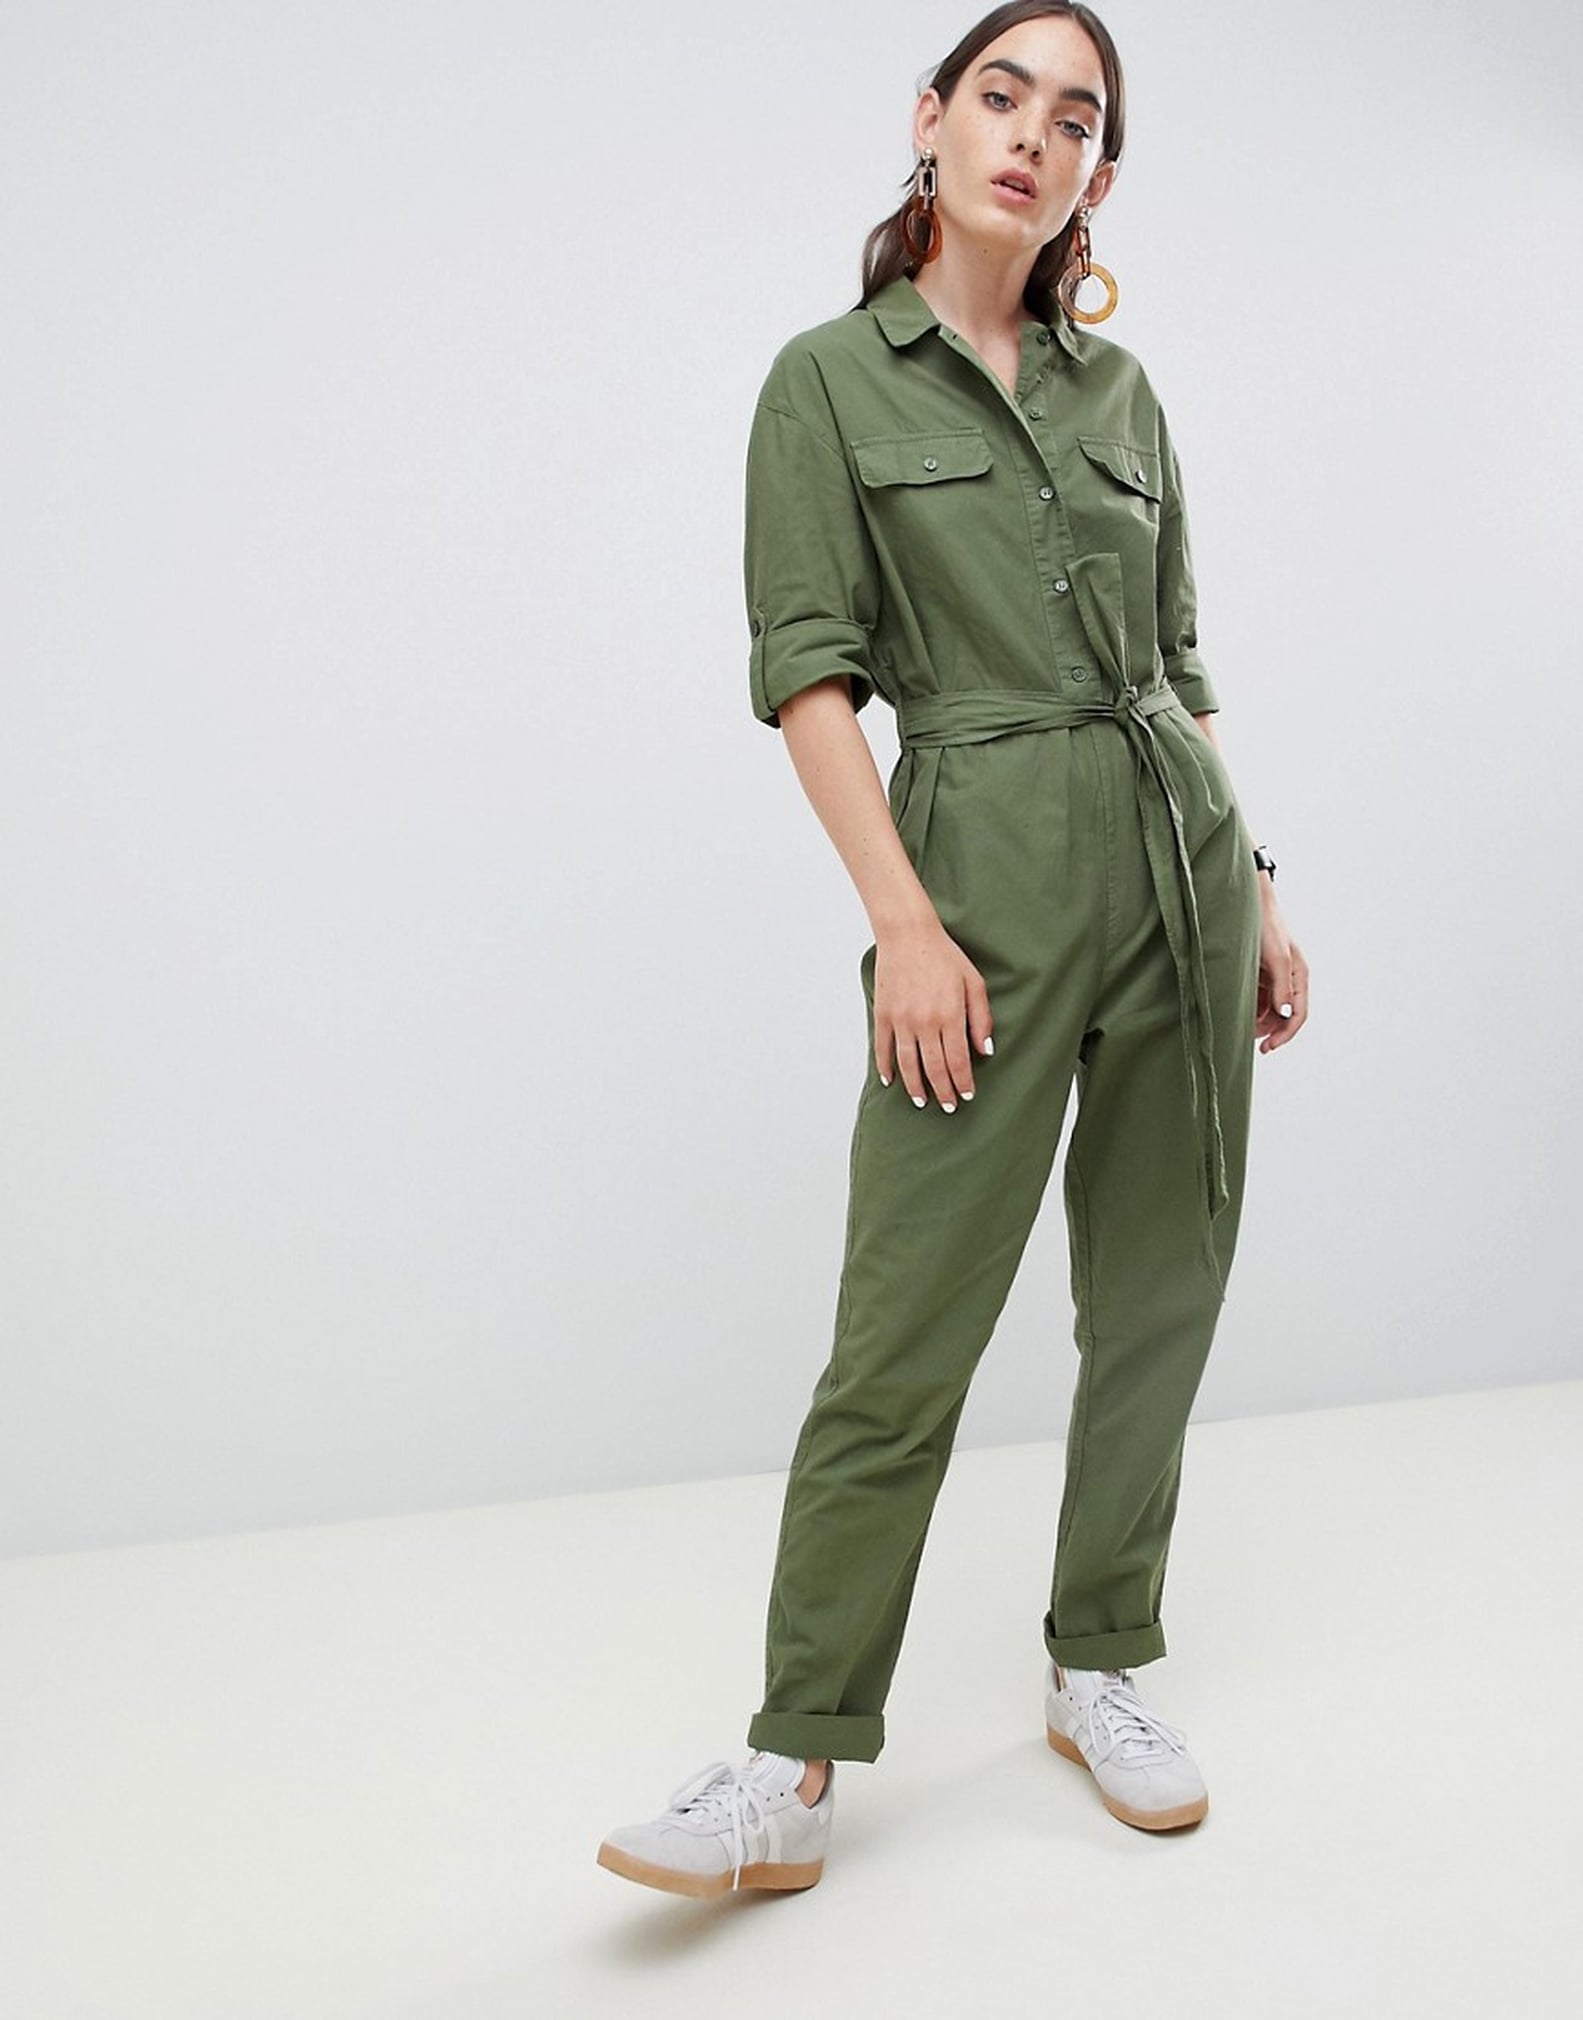 Victoria Beckham Green Jumpsuit November 2018 | POPSUGAR Fashion